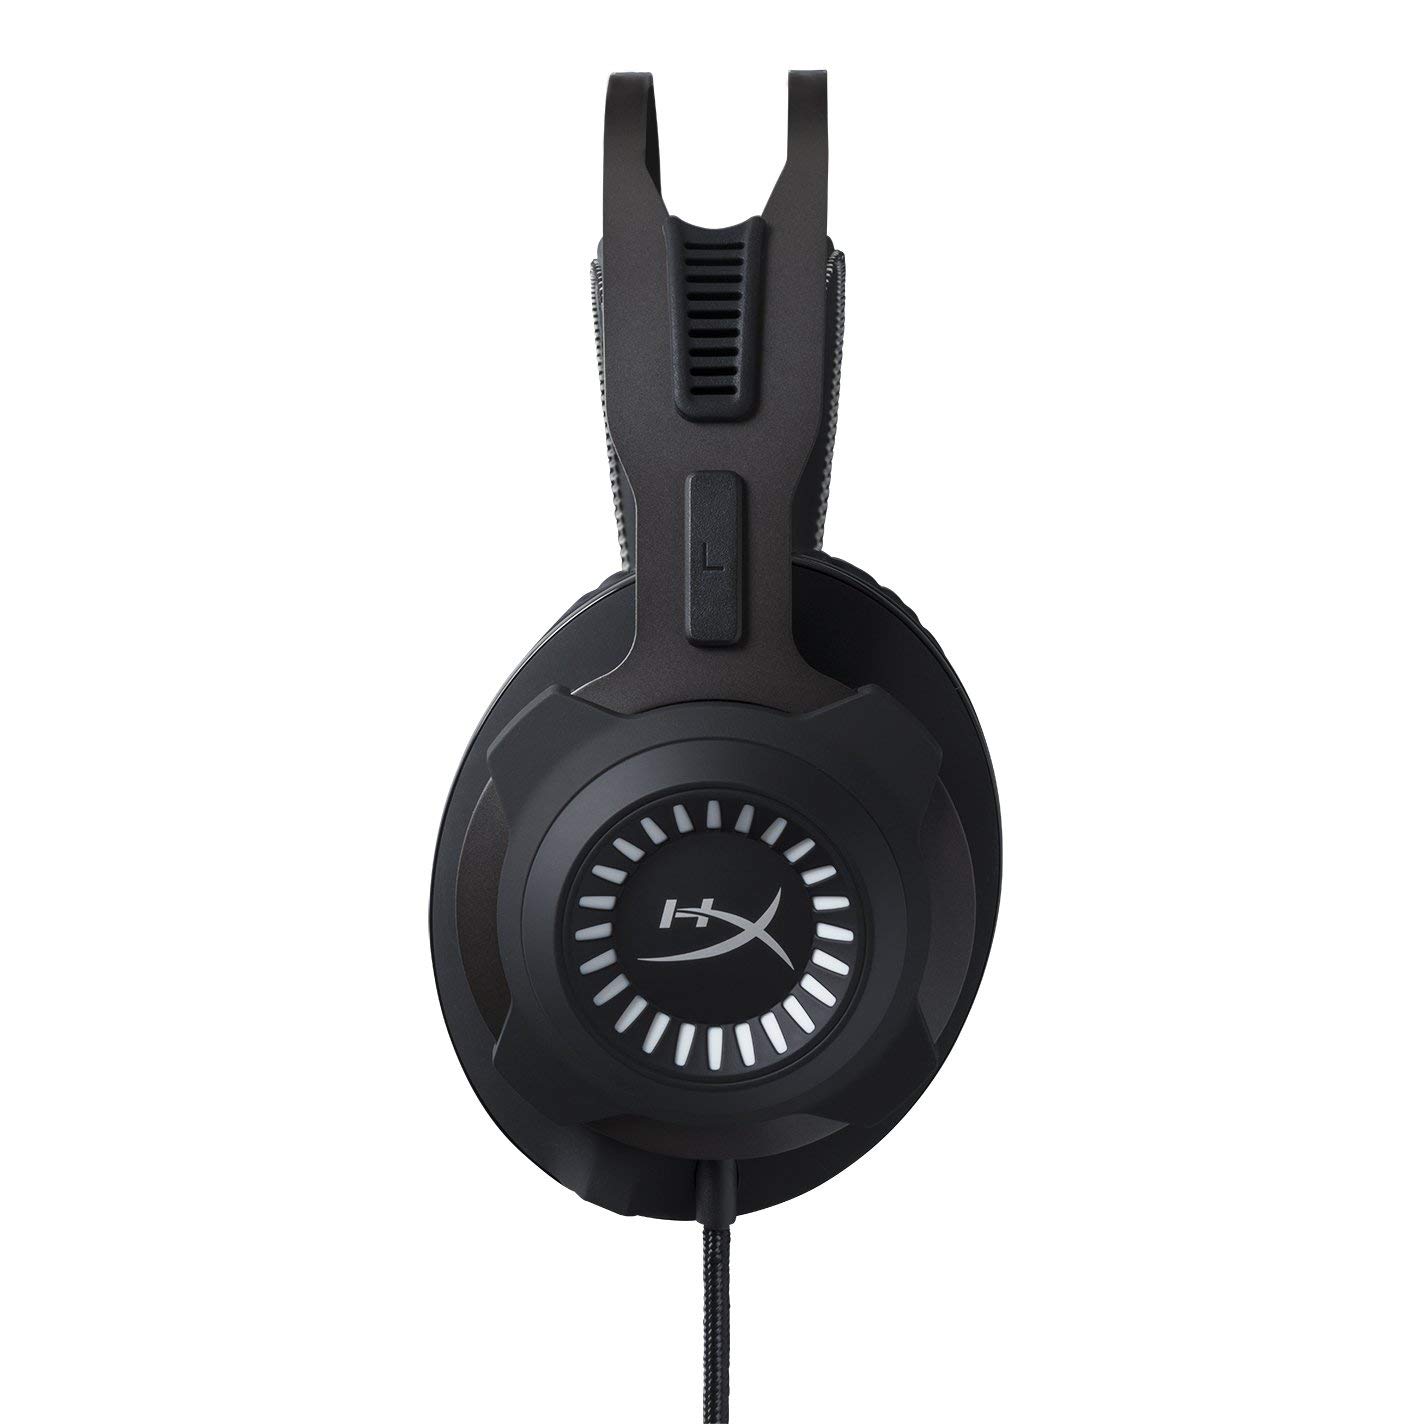 HyperX Cloud Revolver S Gaming Headset Dolby 7.1 Surround สีเทา ประกันศูนย์ 2ปี ของแท้ หูฟังสำหรับเล่นเกม